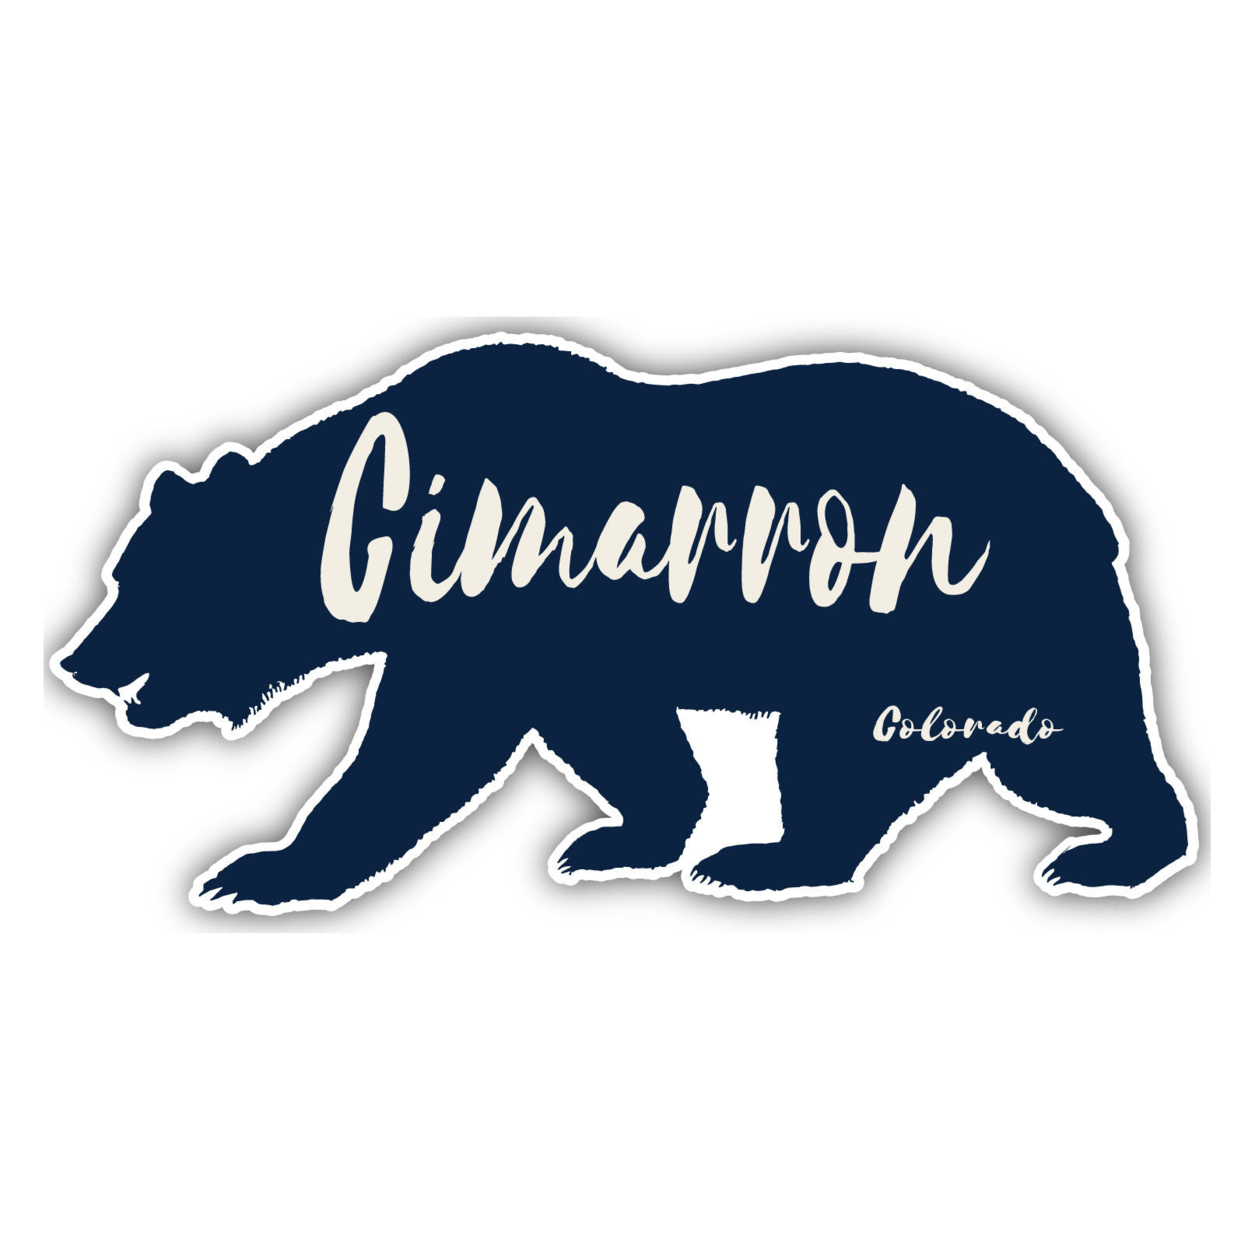 Cimarron Colorado Souvenir Decorative Stickers (Choose Theme And Size) - 4-Pack, 10-Inch, Bear